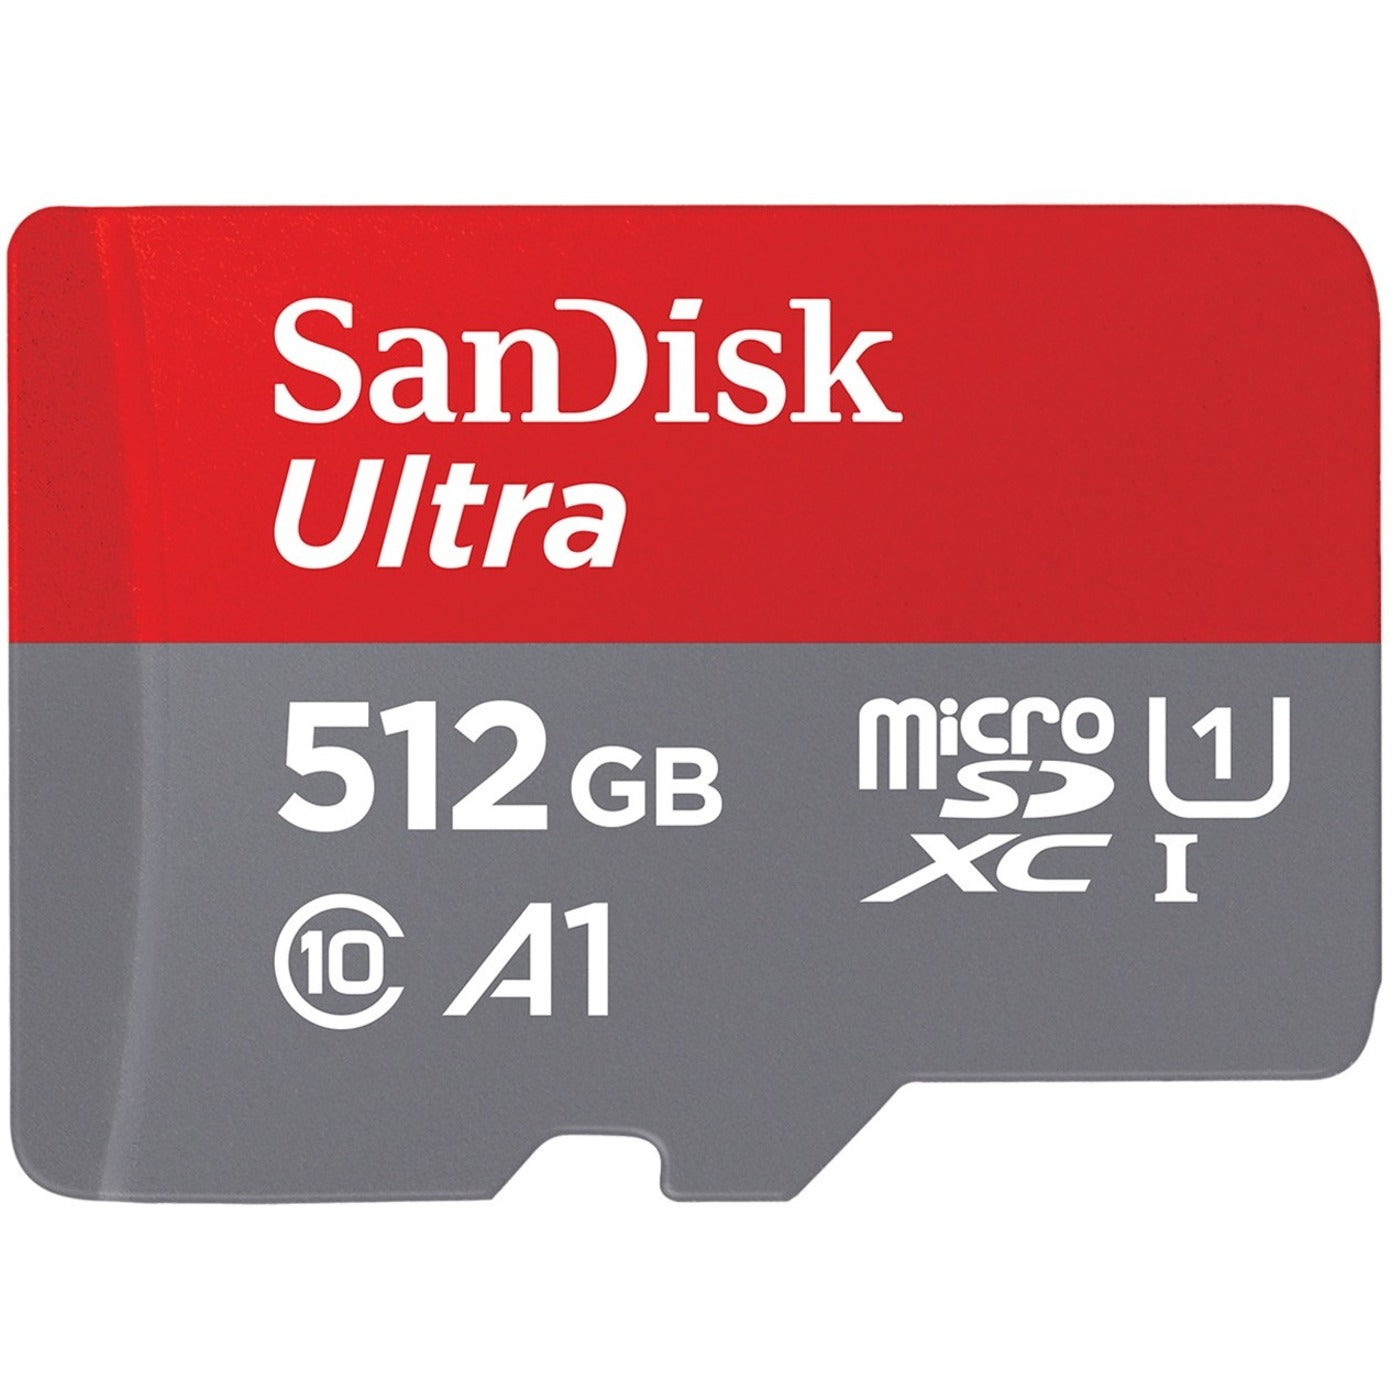 SanDisk SDSQUAR-512G-AN6MA Ultra microSD UHS-I Card 512GB, 10 Year Warranty, 100 MB/s Read Speed